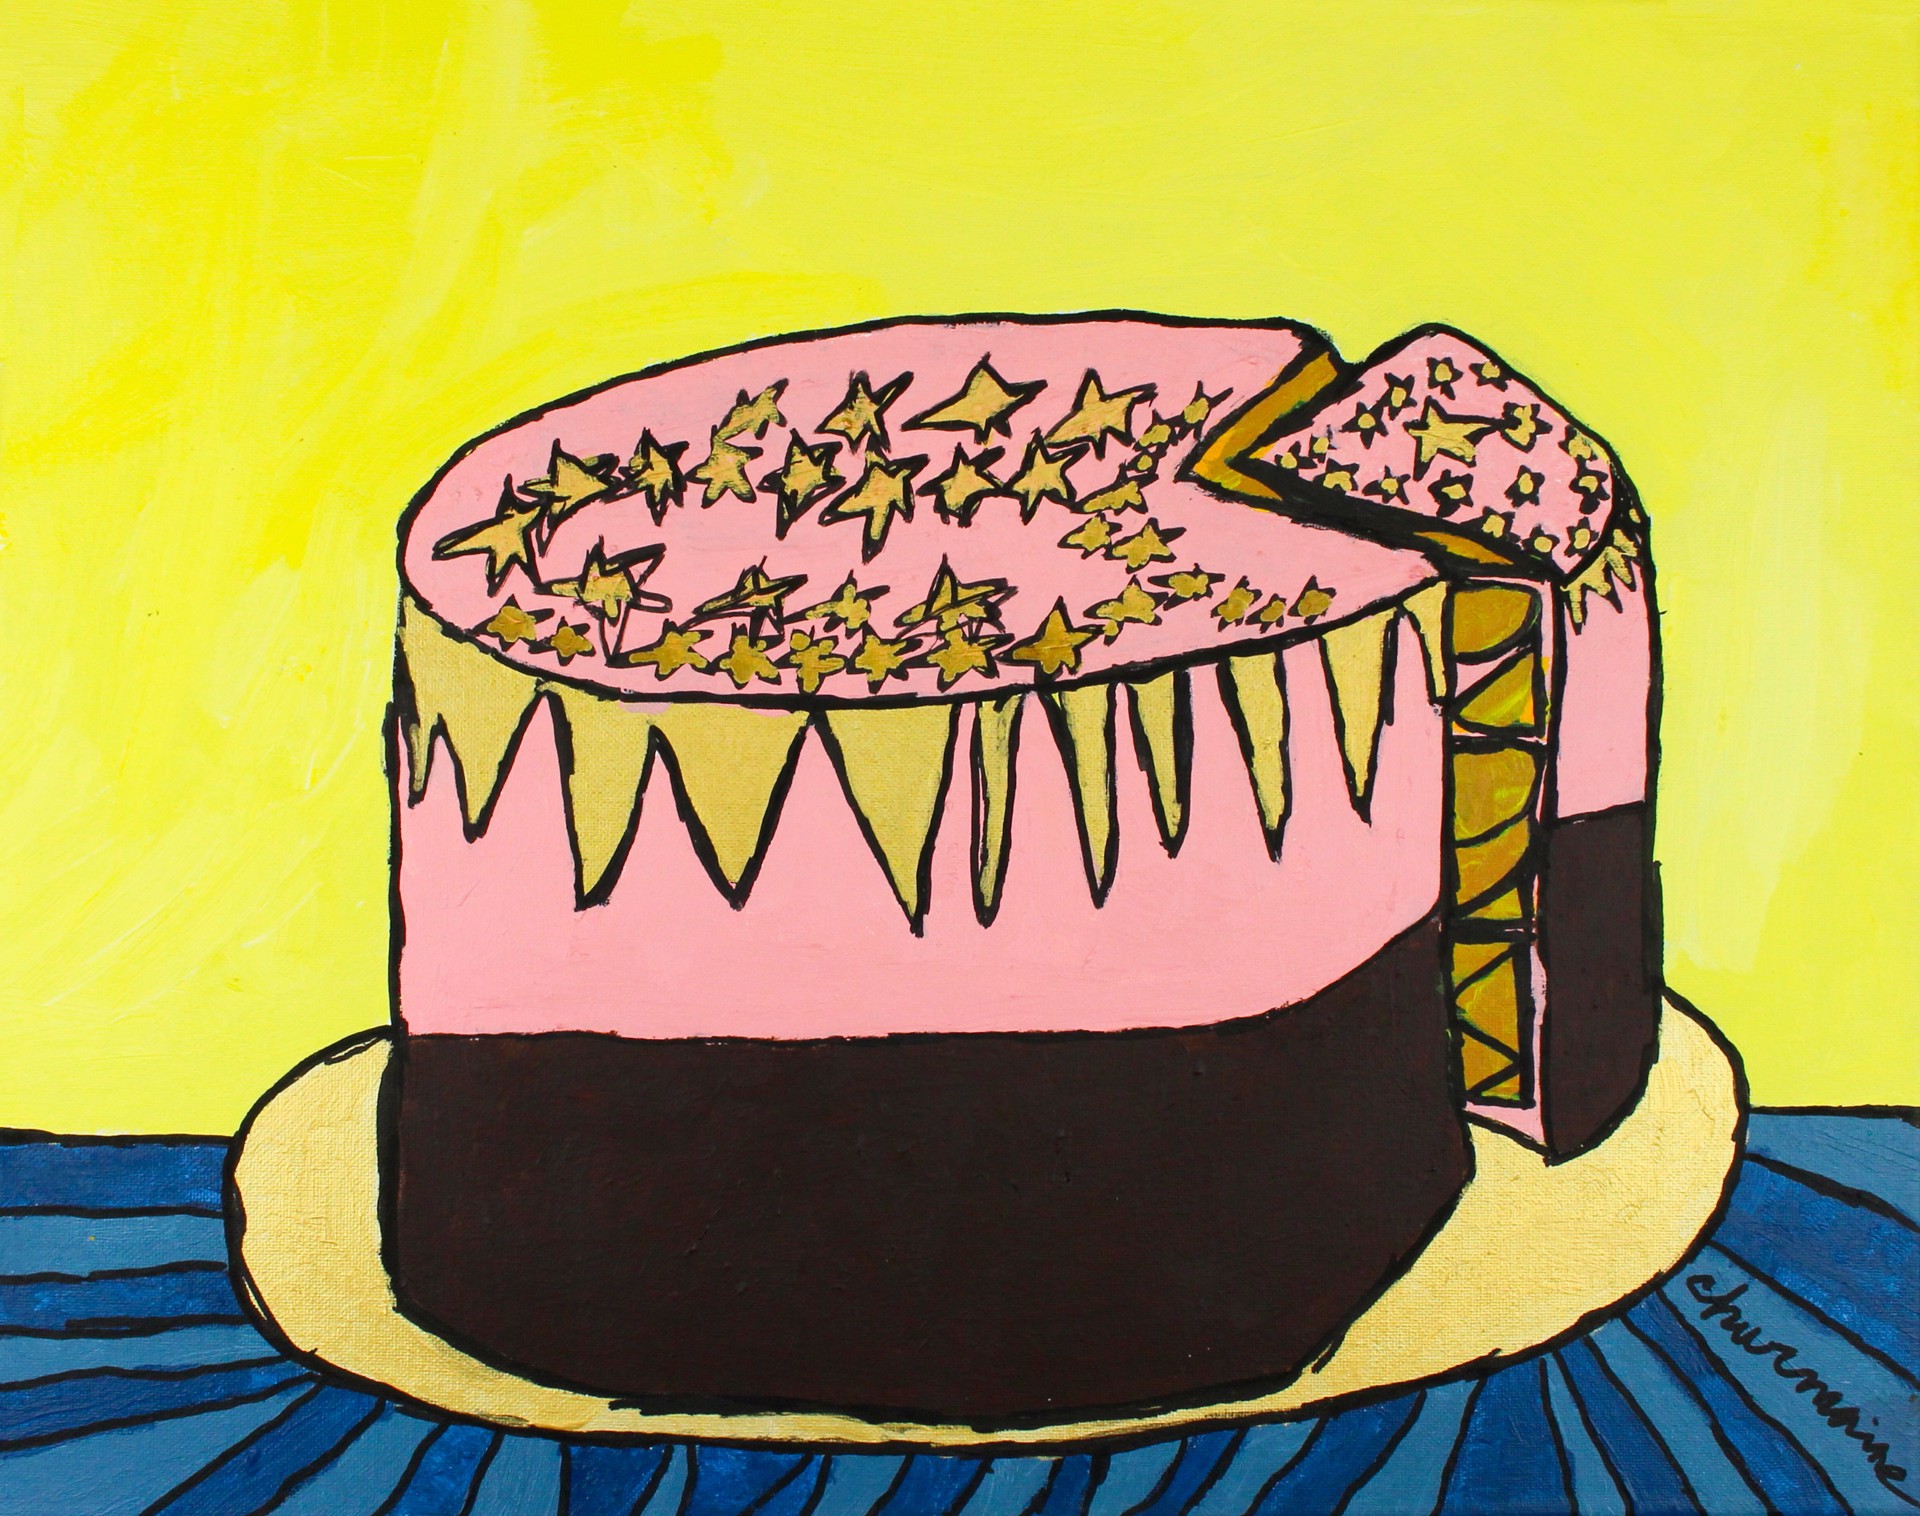 Golden Star Cake by Charmaine Jones